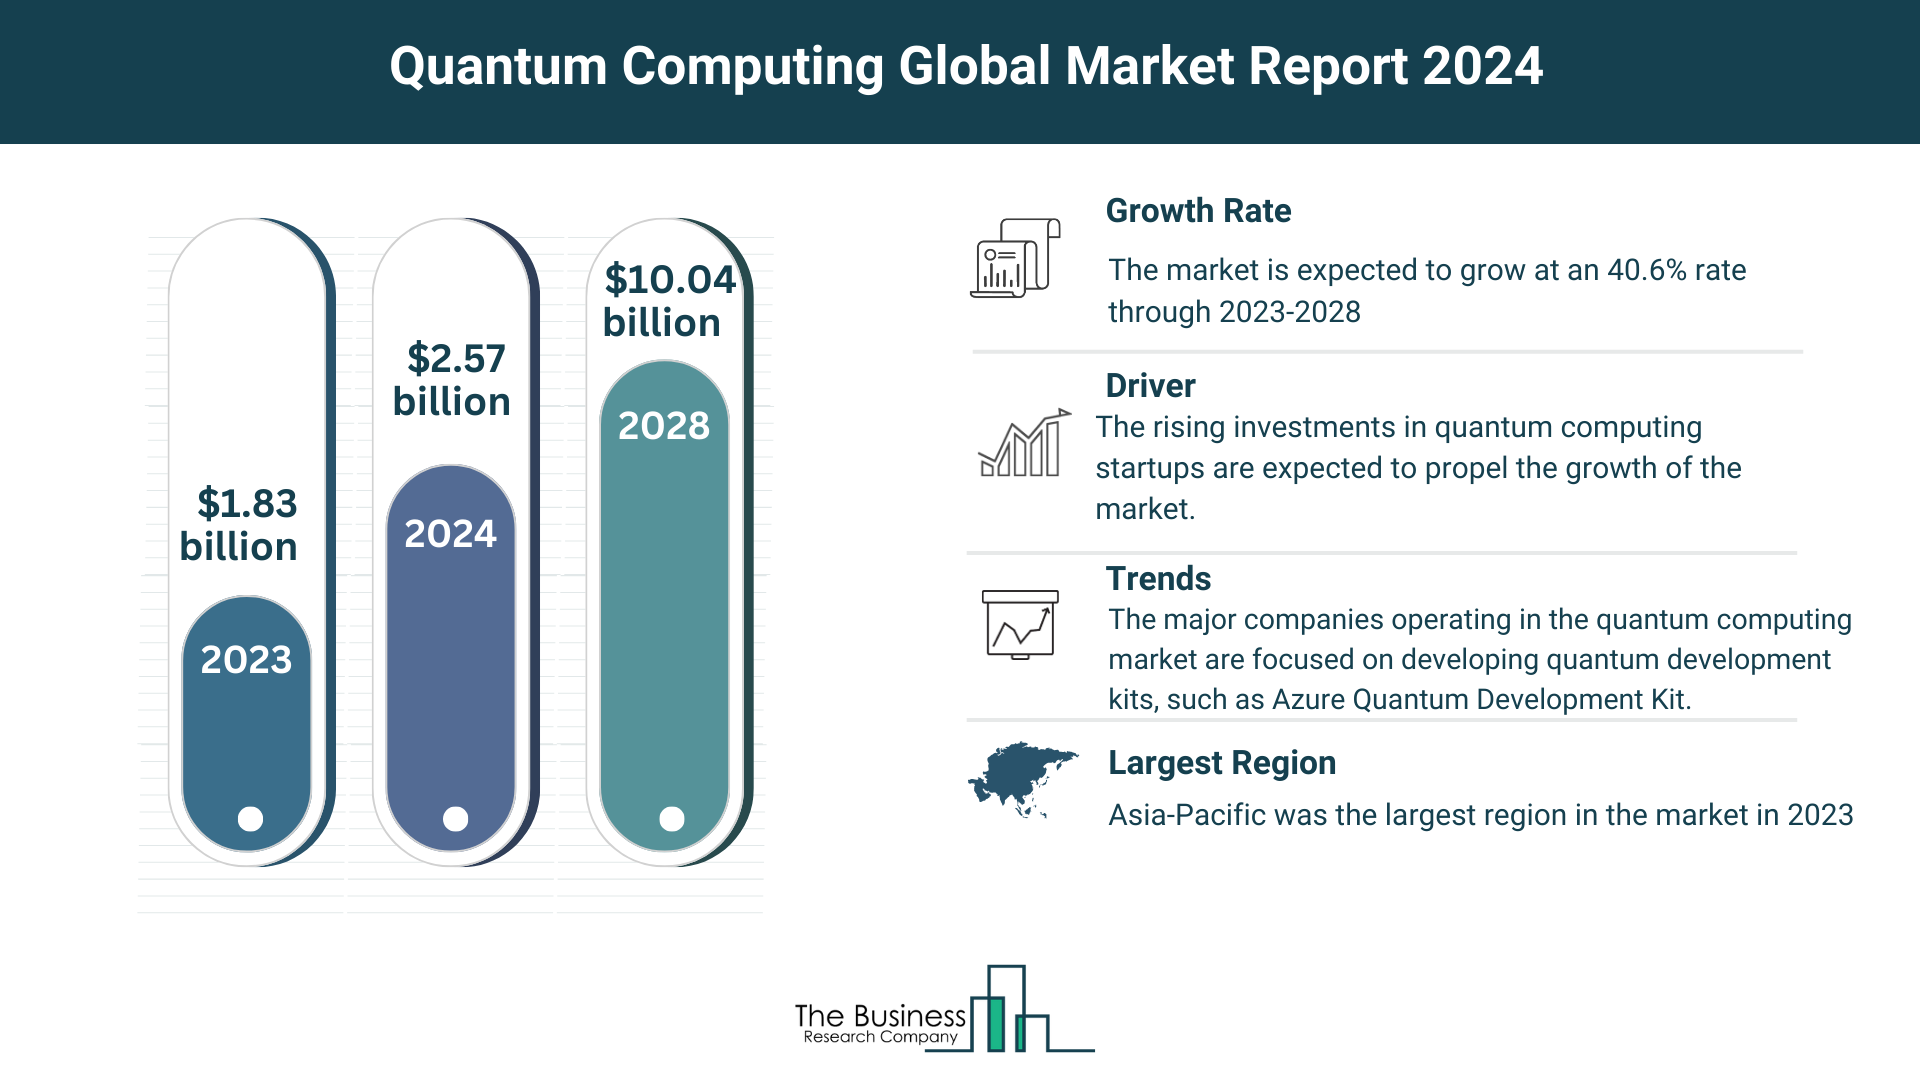 Global Quantum Computing Market